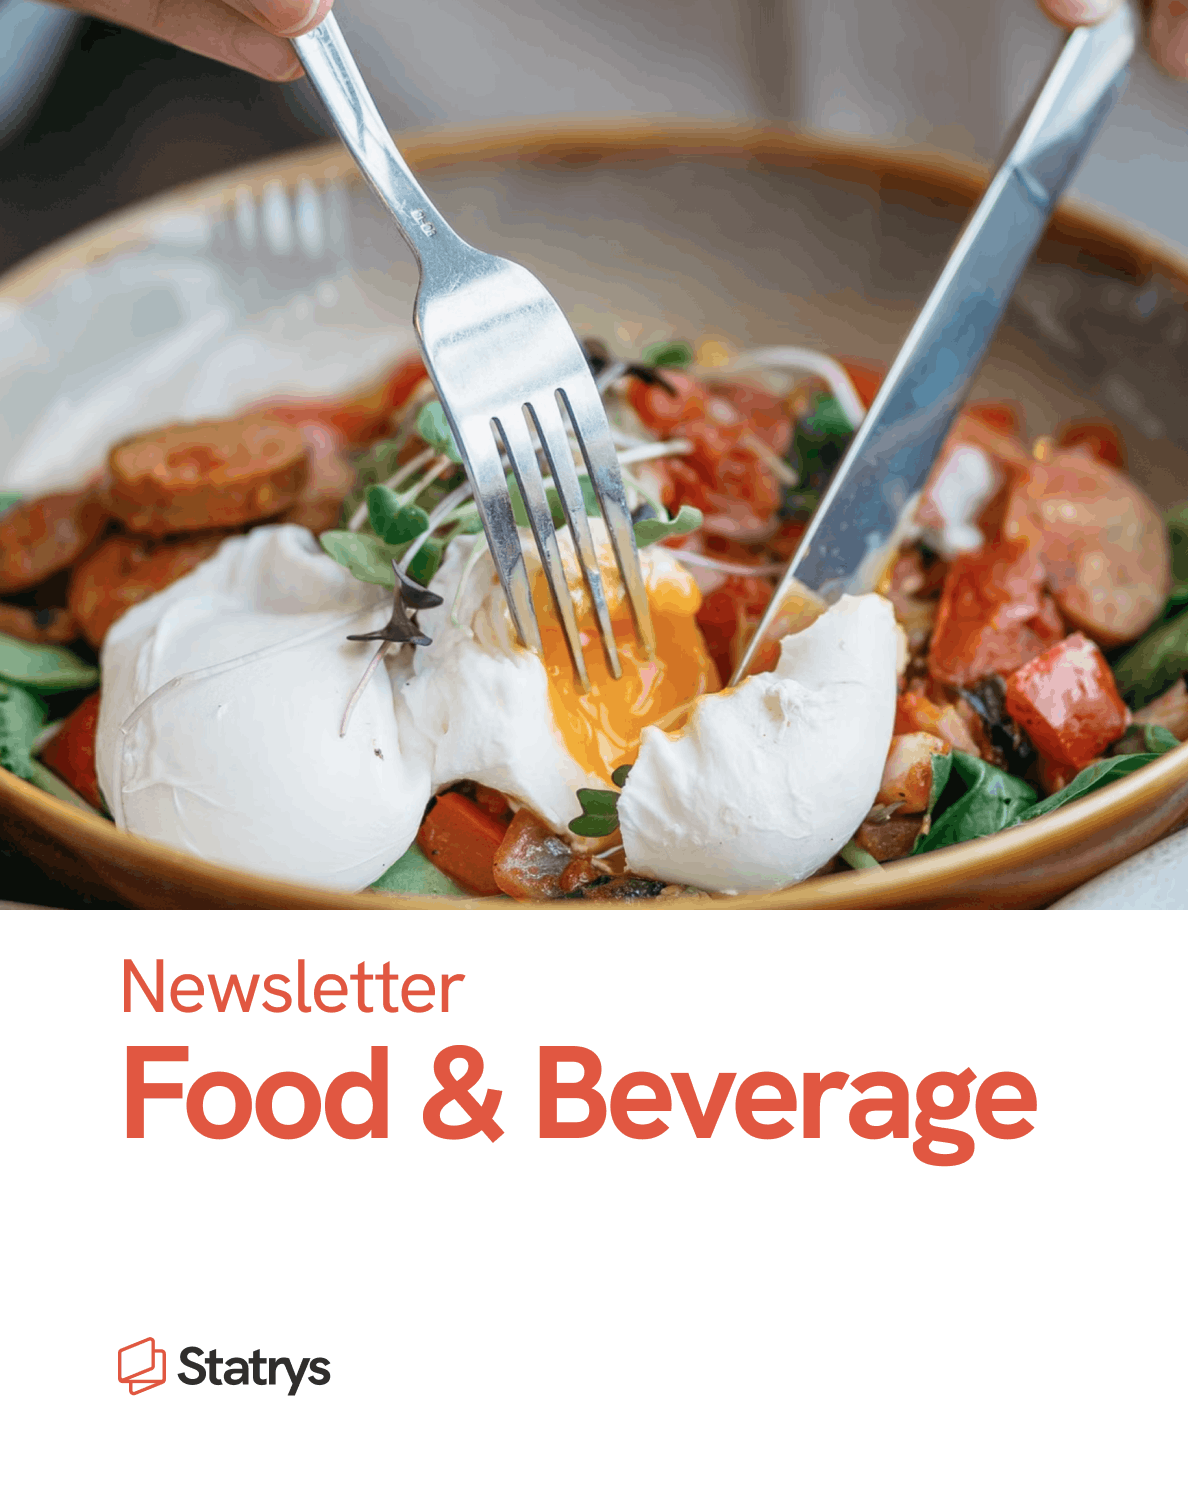 Food and beverage newsletter